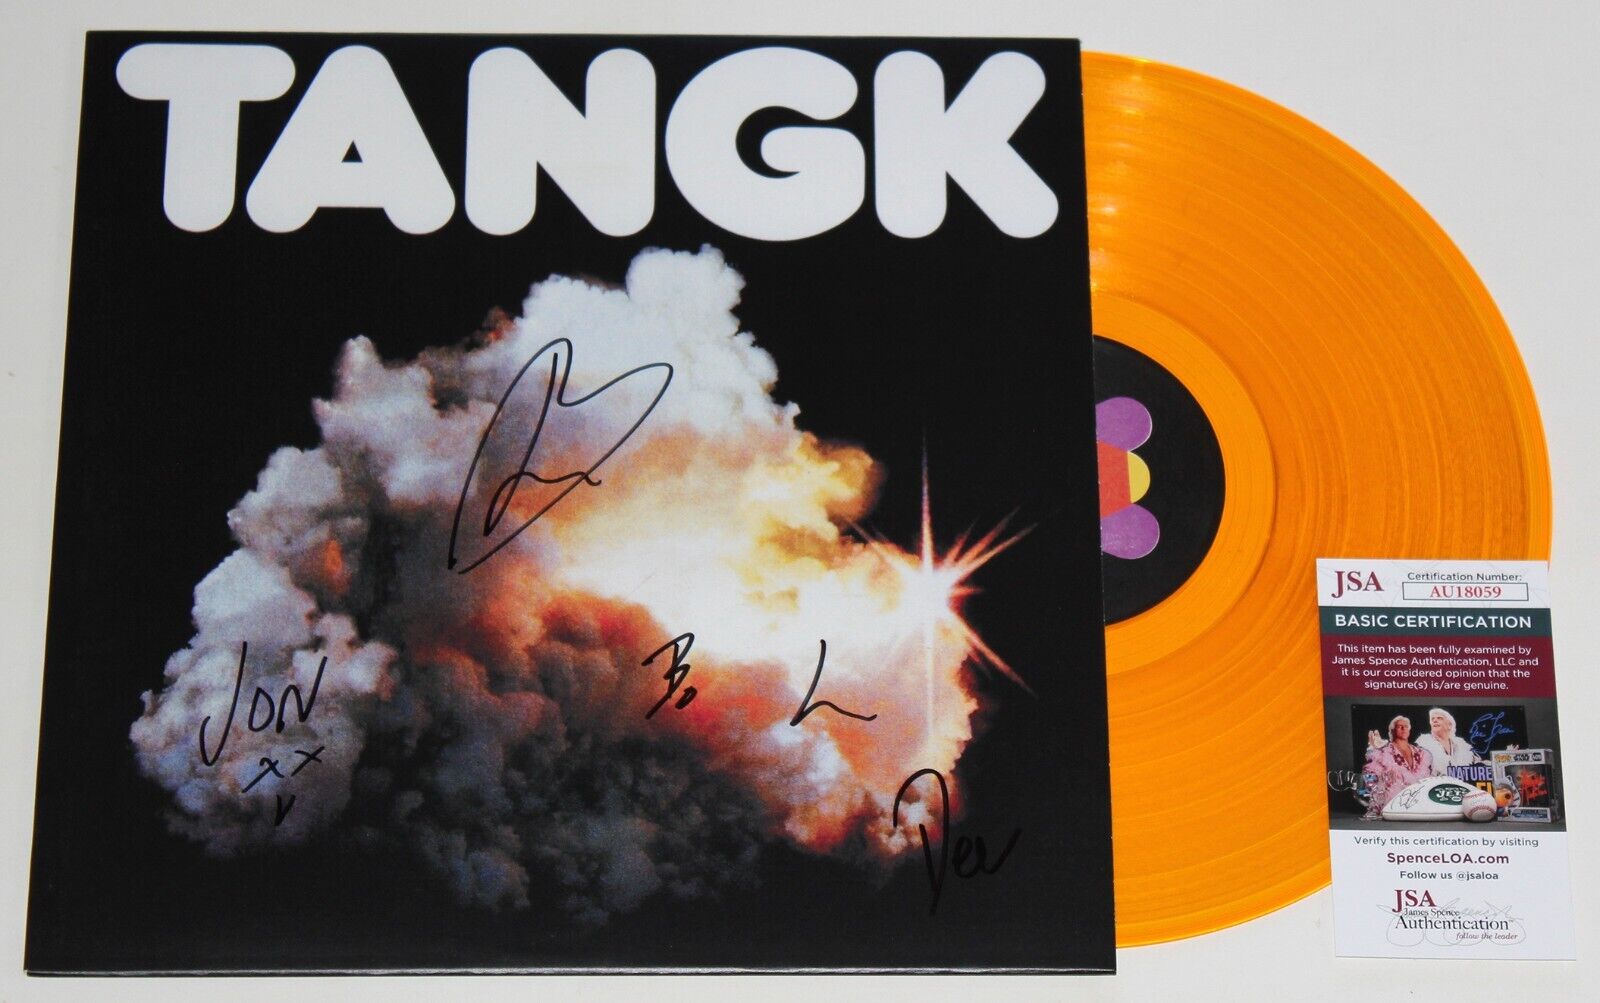 IDLES BAND SIGNED TANGK LP ORANGE VINYL RECORD ALBUM RARE AUTOGRAPHED +JSA COA